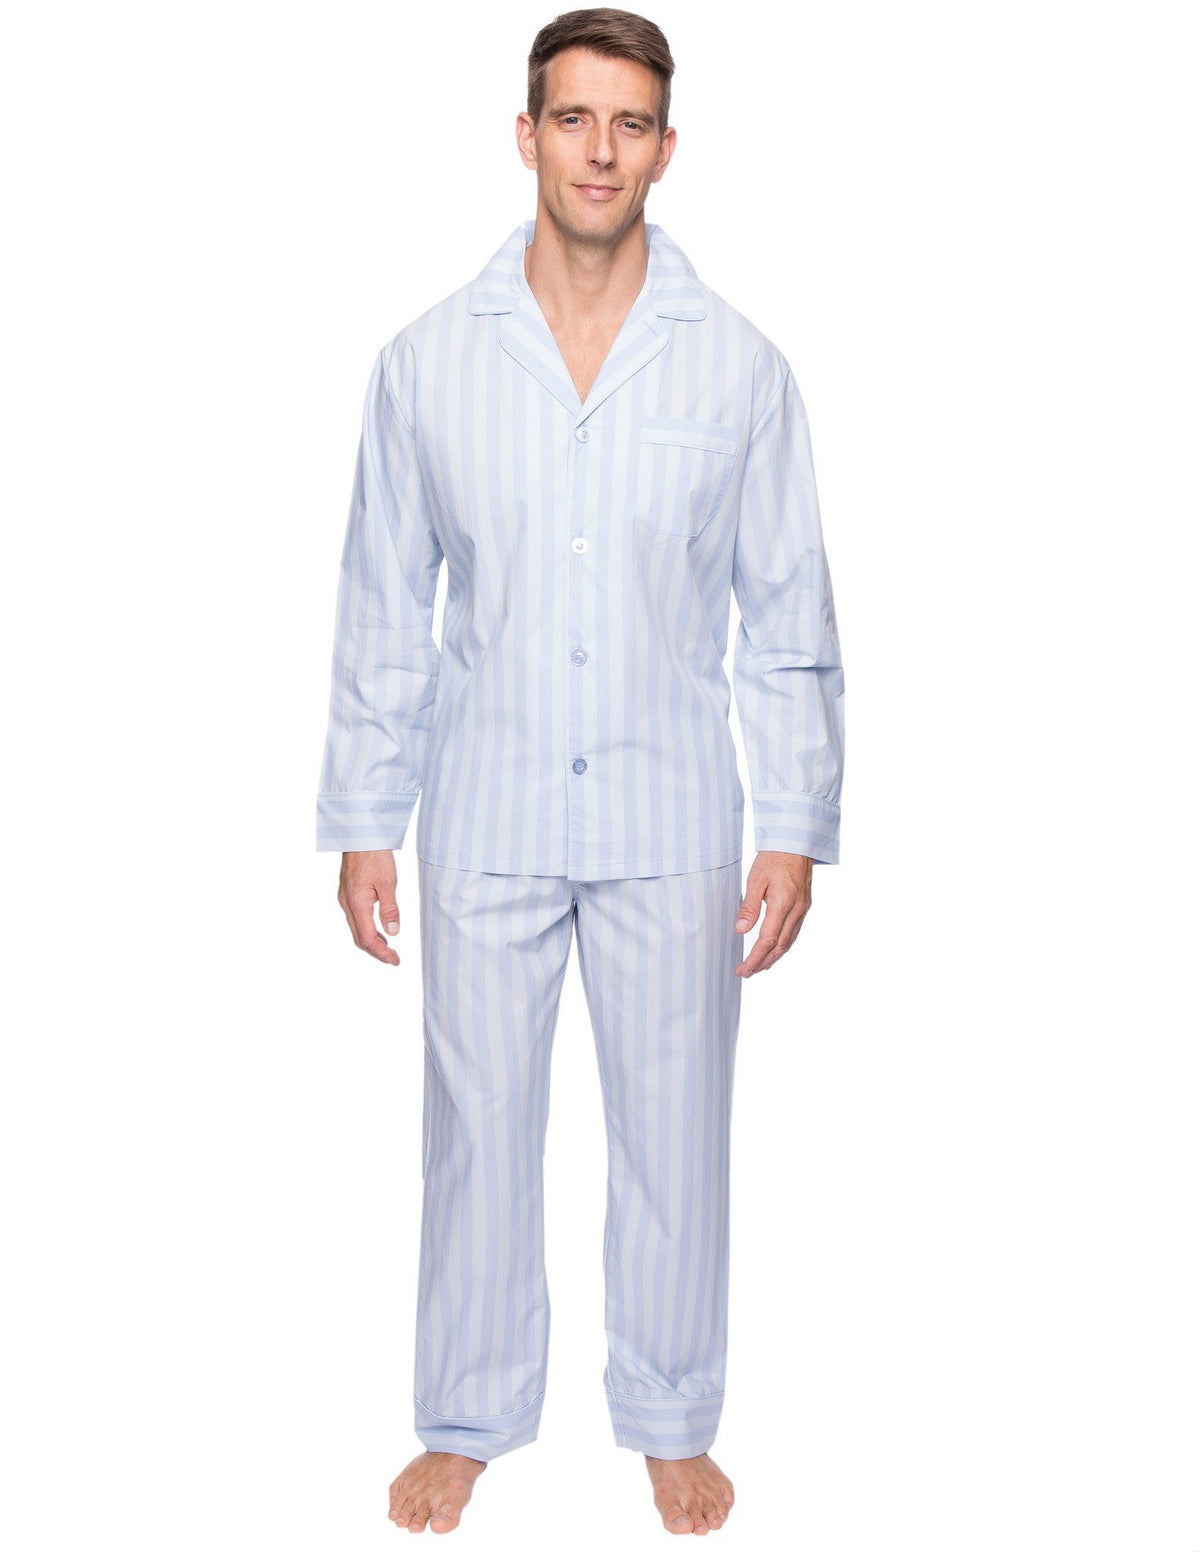 Men's Premium 100% Cotton Woven Pajama Sleepwear Set - Stripes Chambray Blue